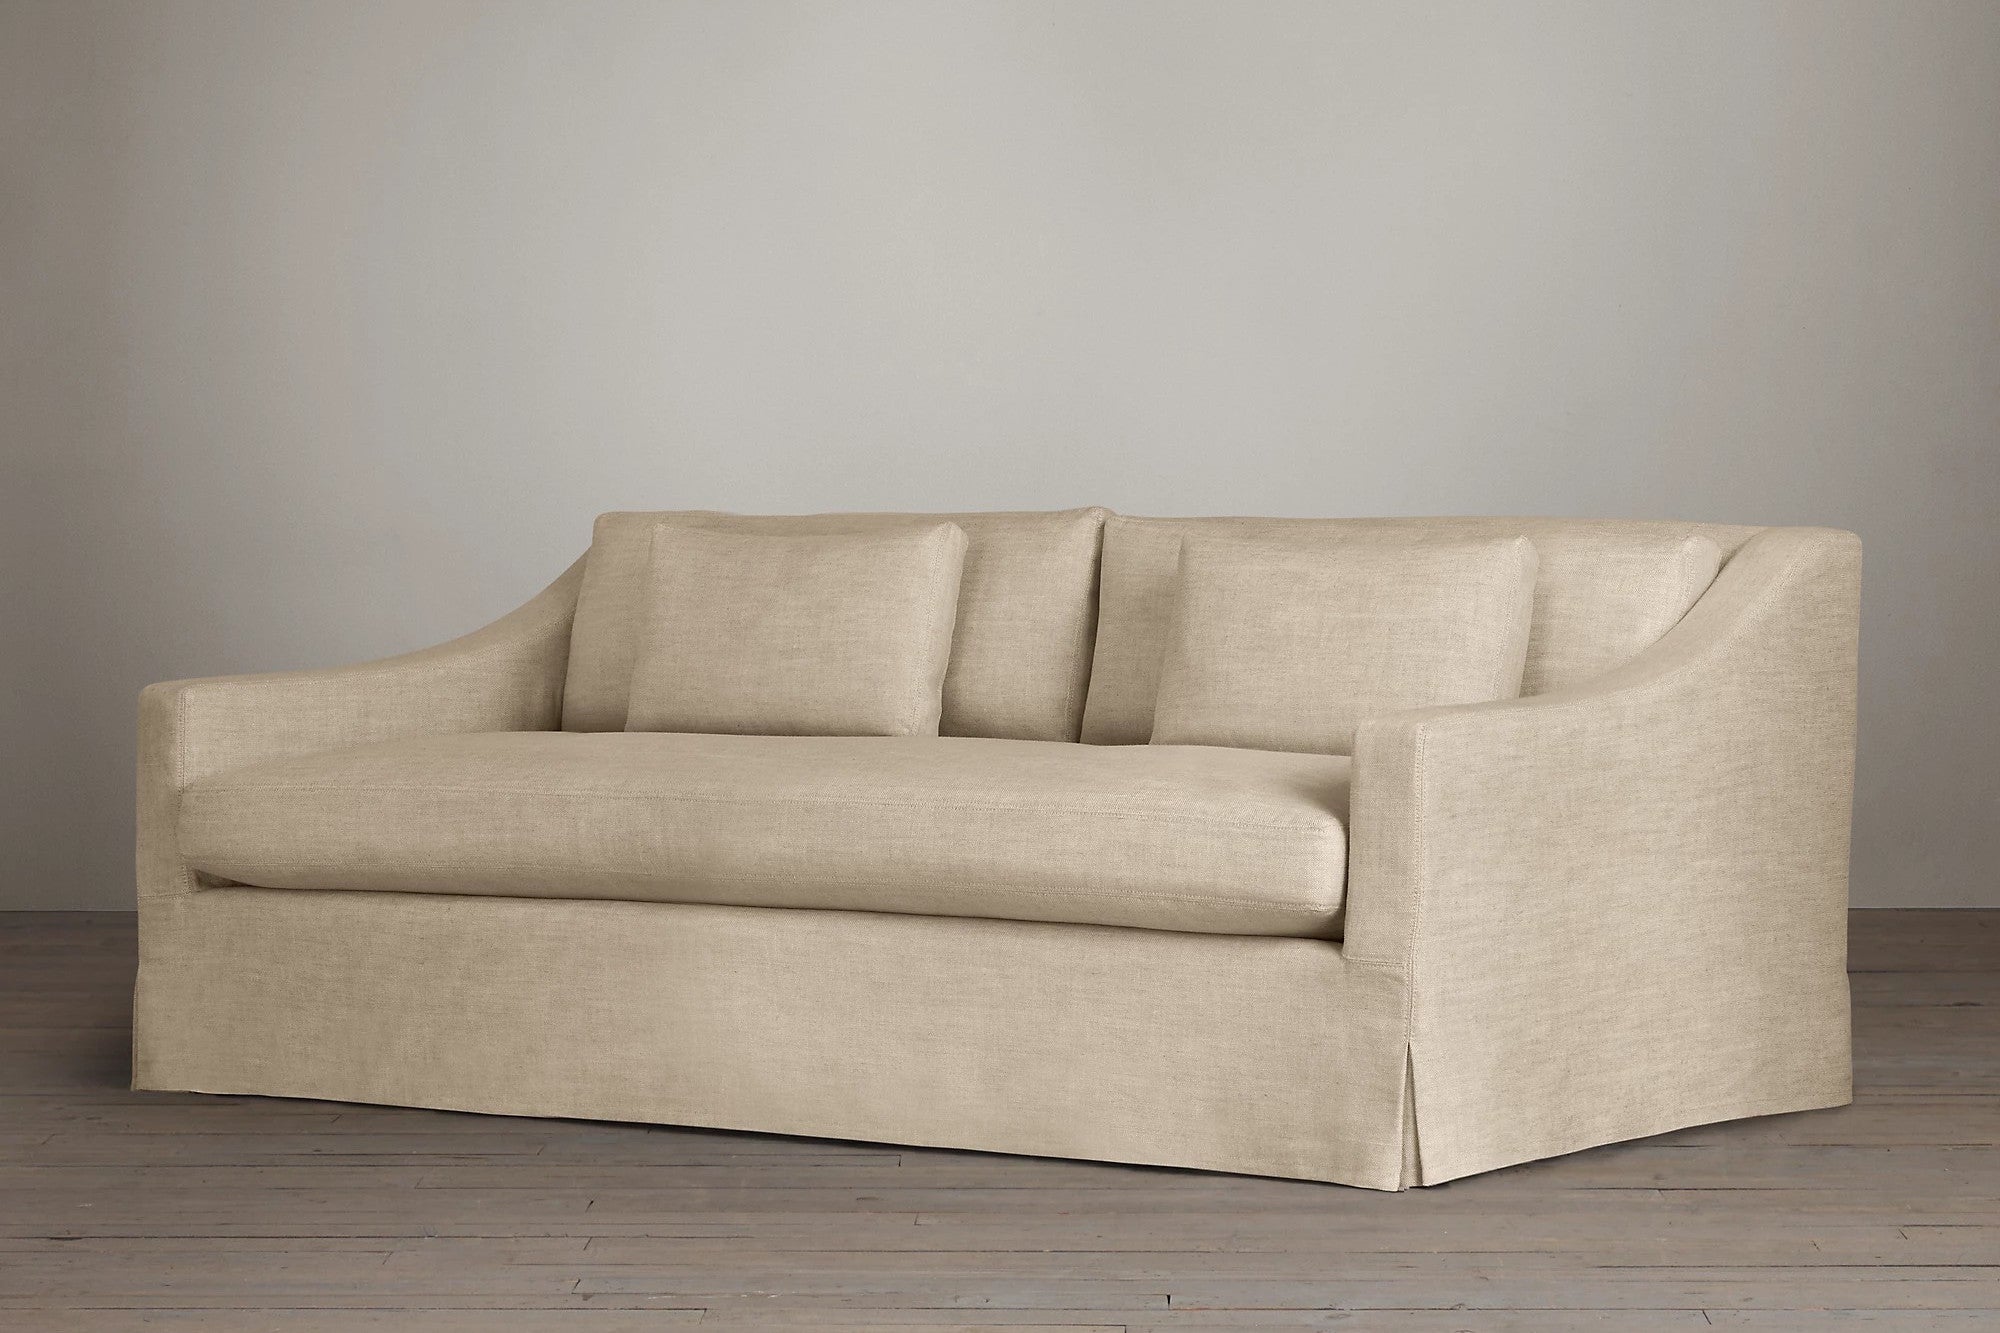 https://daiahome.com/products/prati-modern-classic-loose-cover-sofa